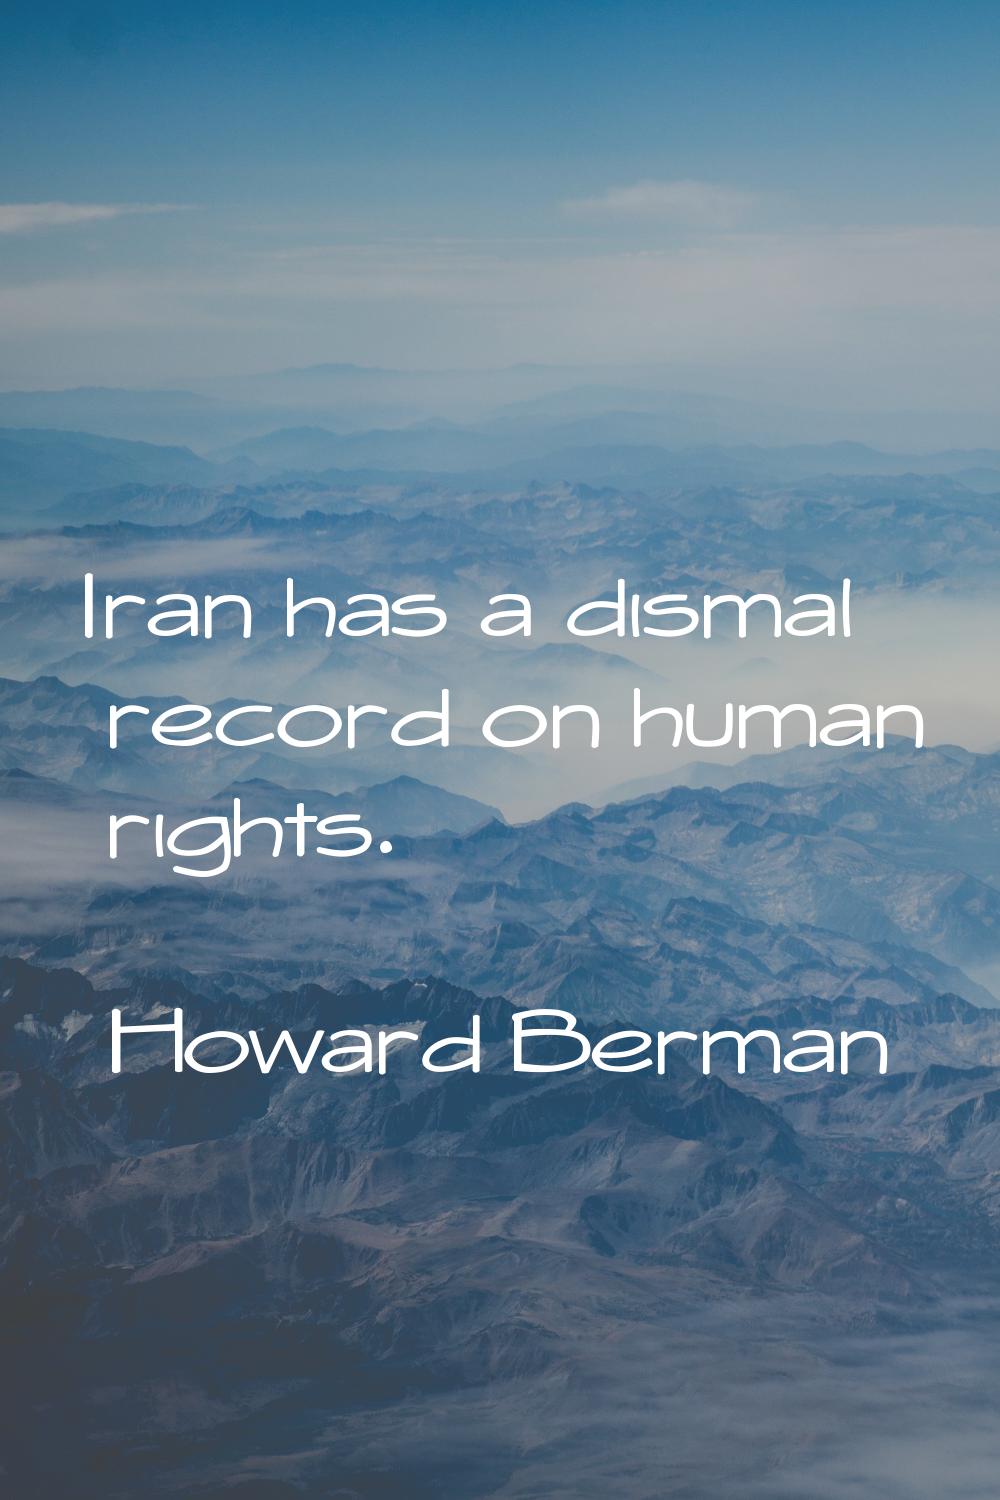 Iran has a dismal record on human rights.